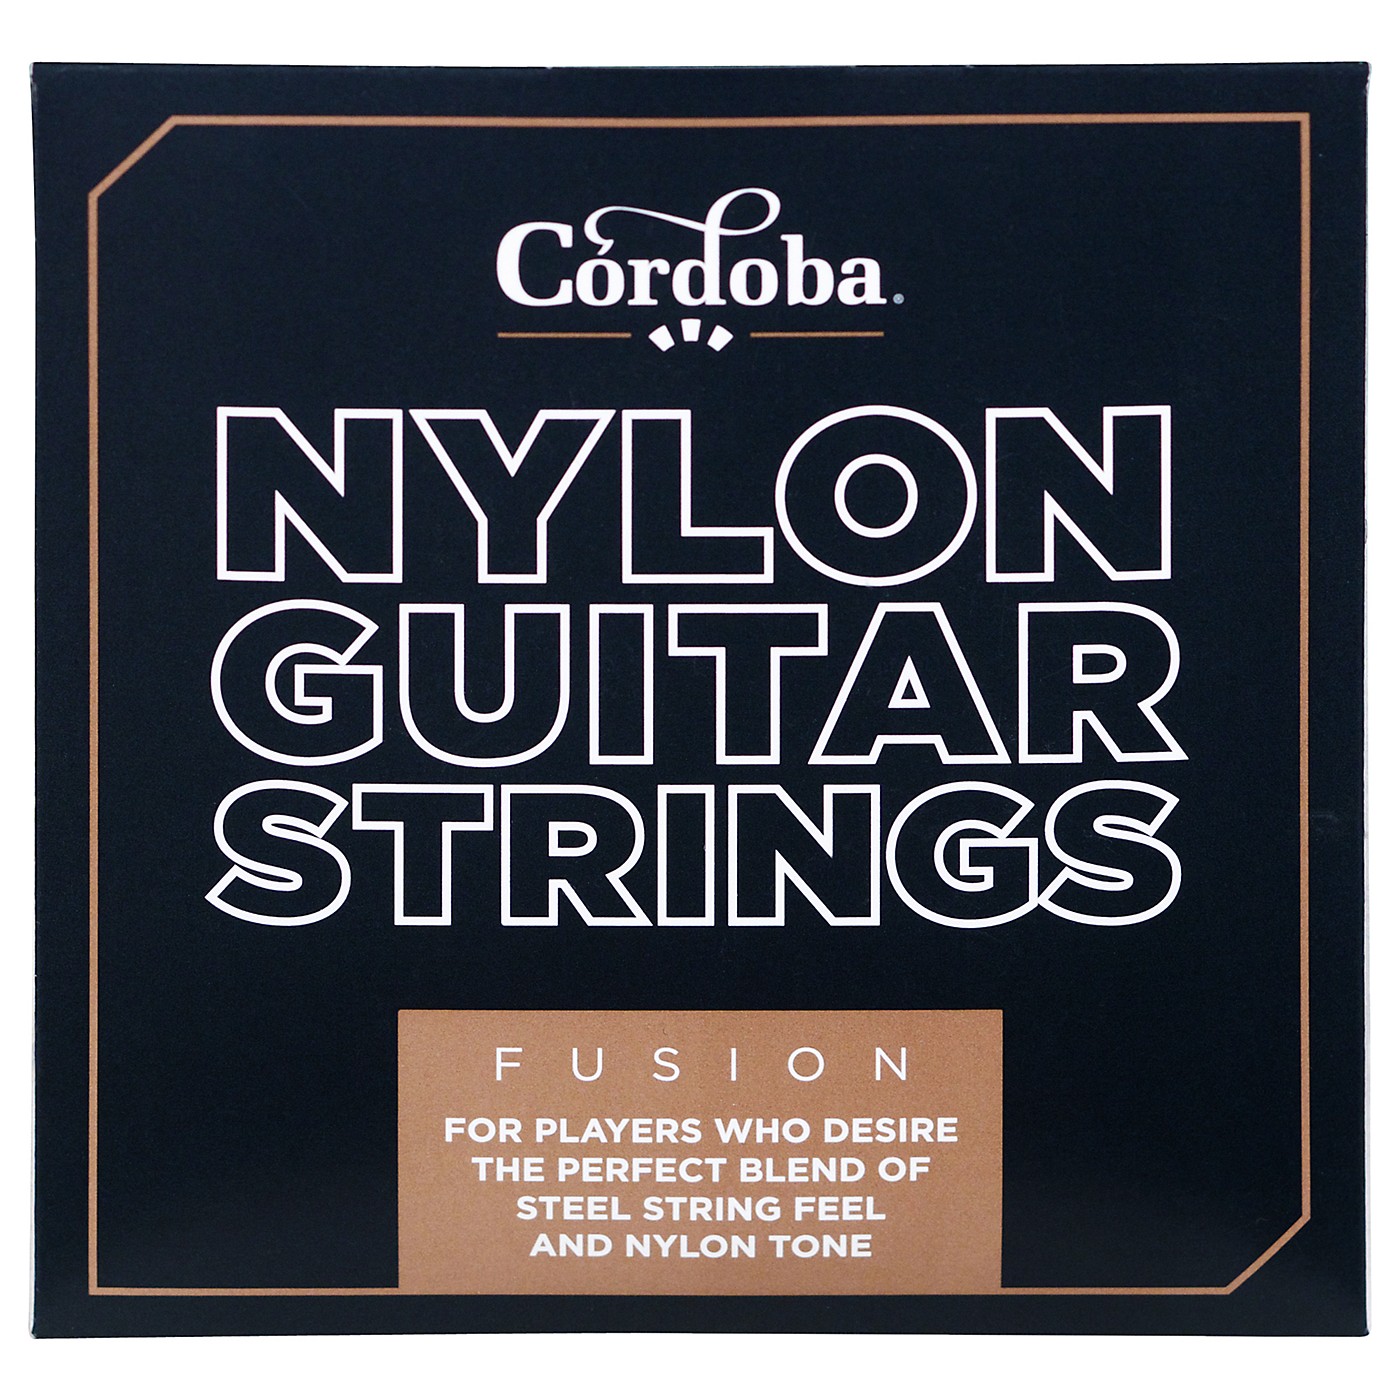 Cordoba Nylon Guitar Strings Fusion Tension Brown thumbnail